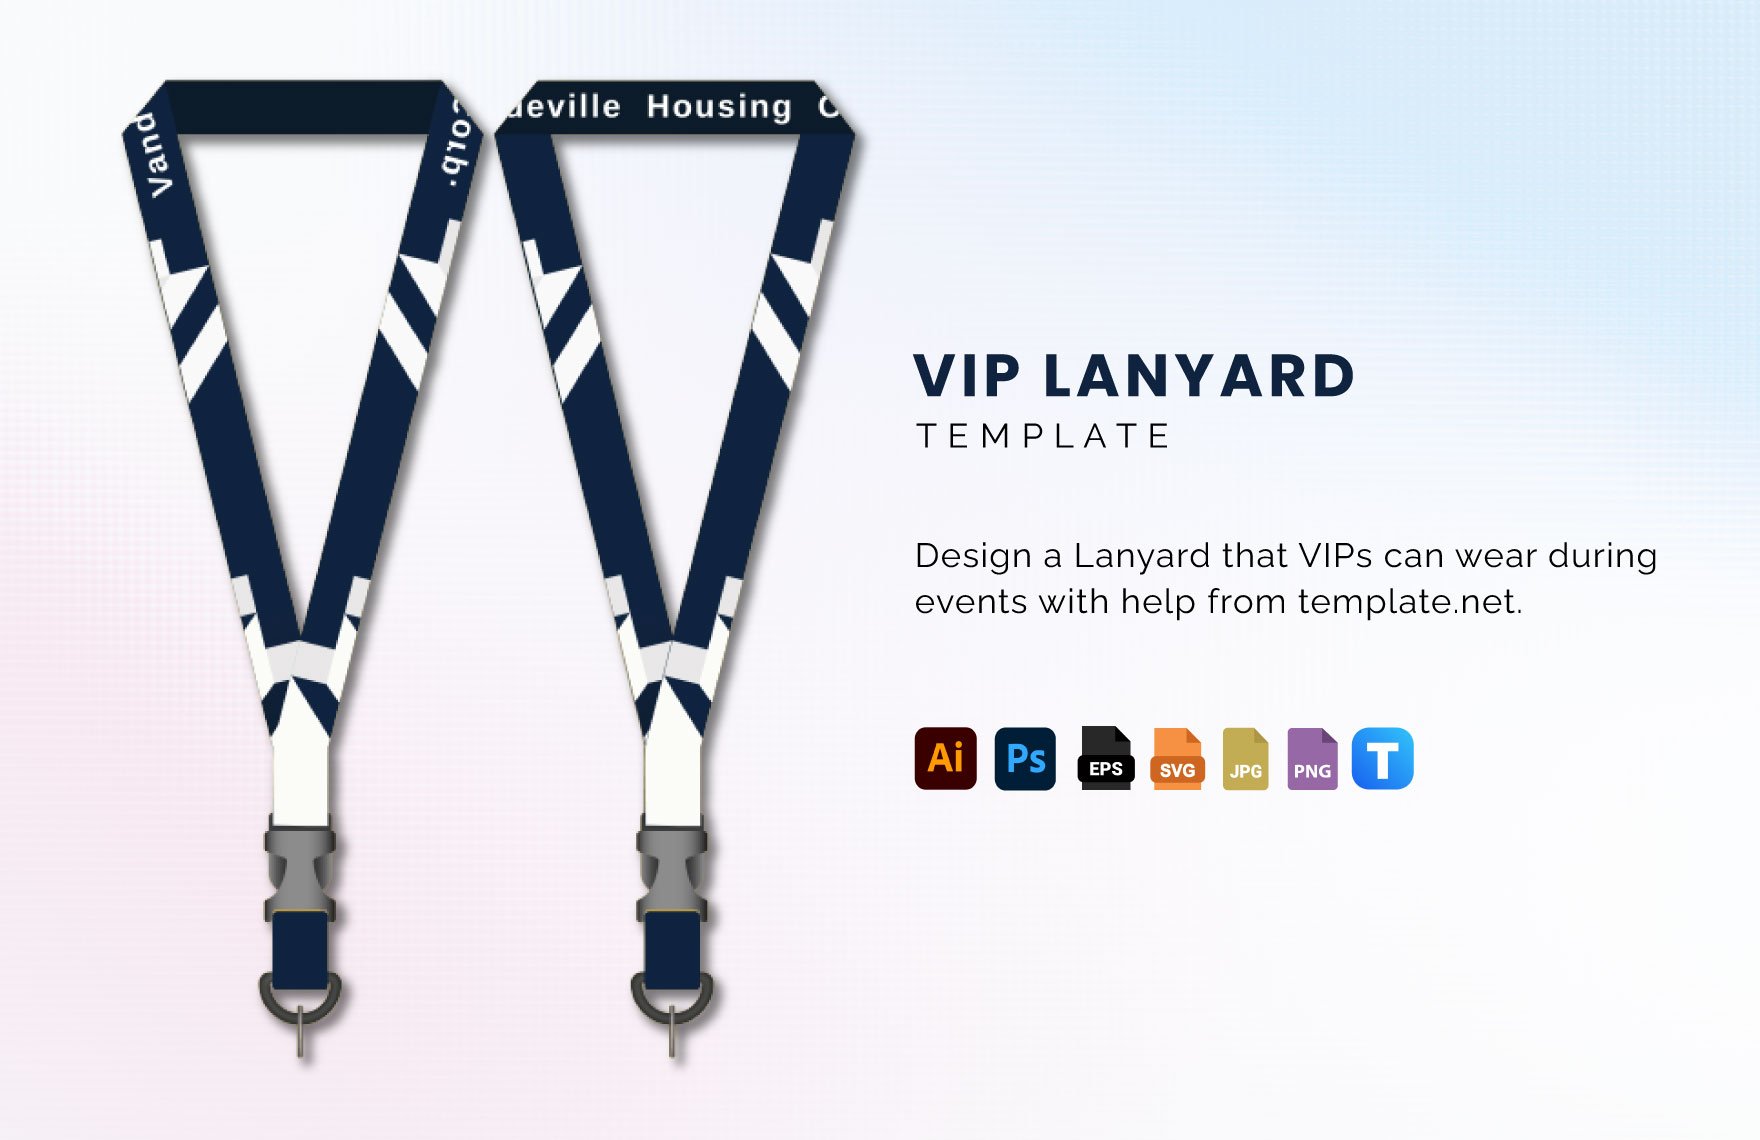 VIP Lanyard Template in Illustrator, PSD, EPS, SVG, JPG, PNG